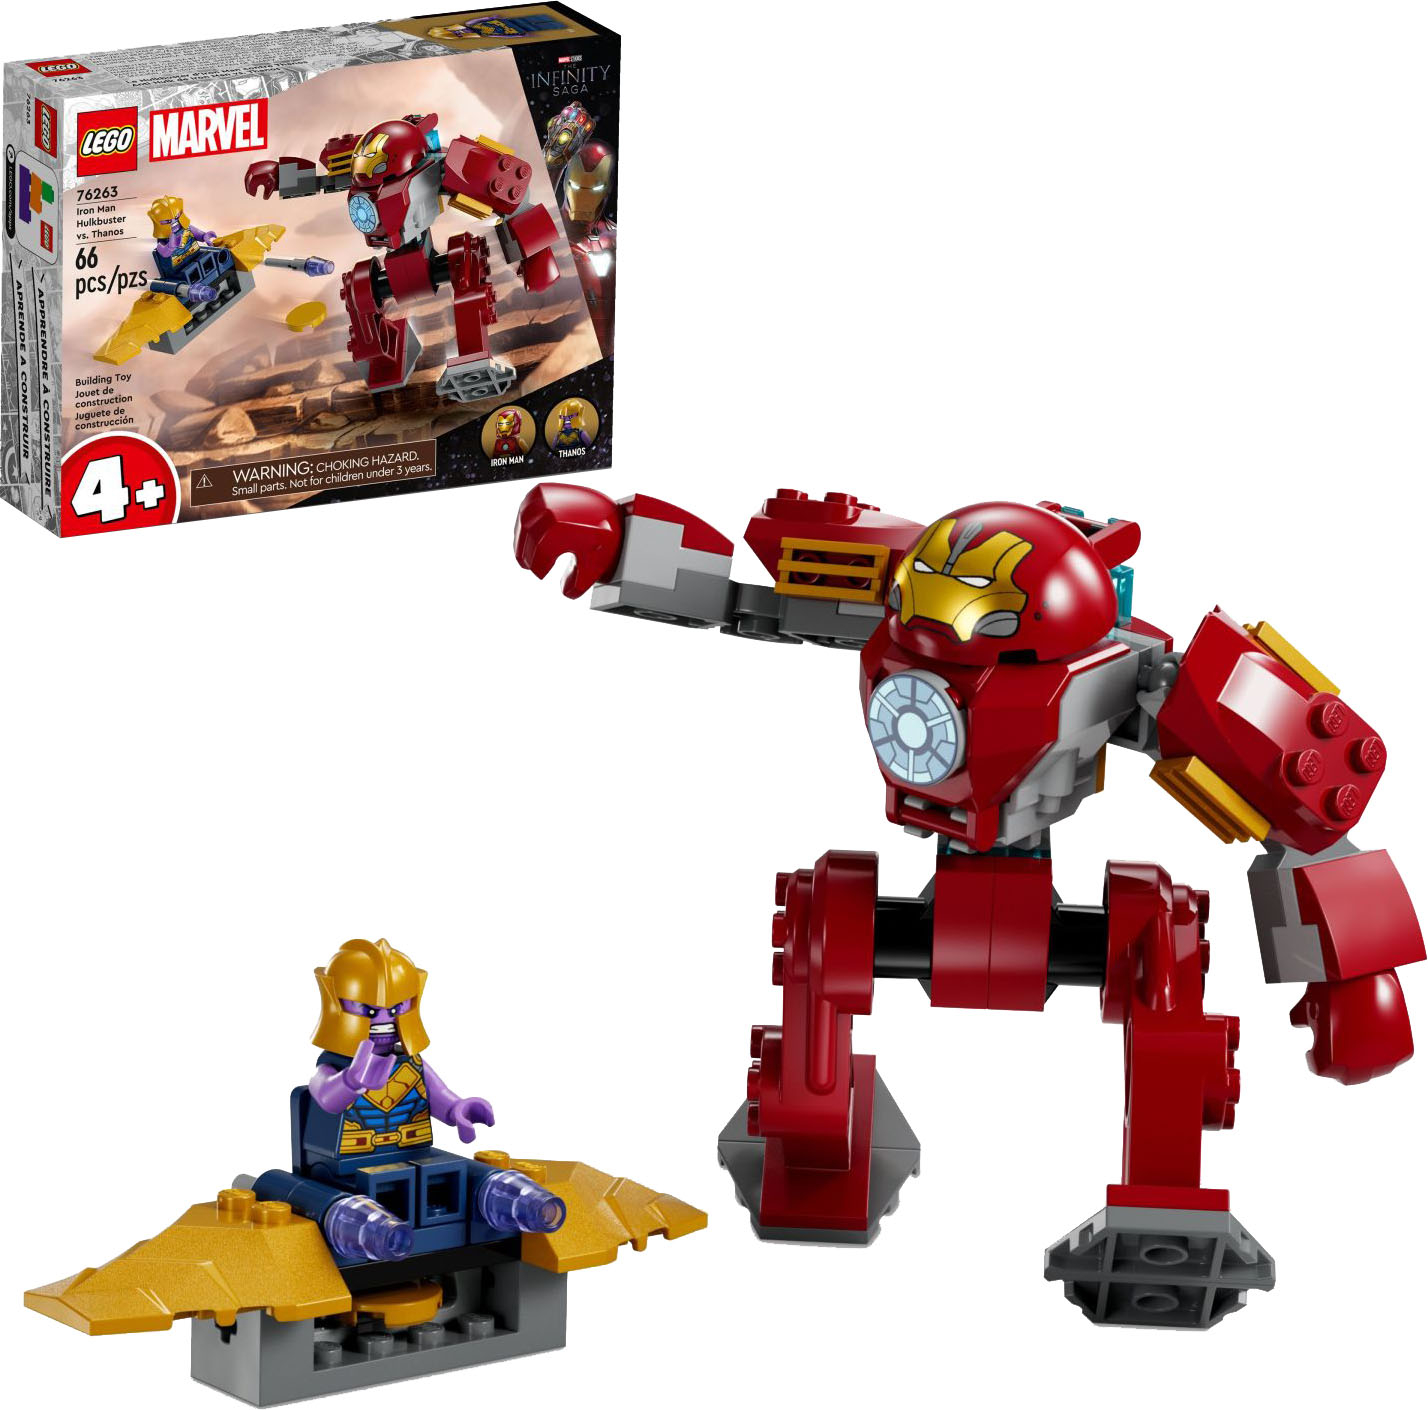  LEGO Marvel Avengers Endgame Minifigure - Thanos (with